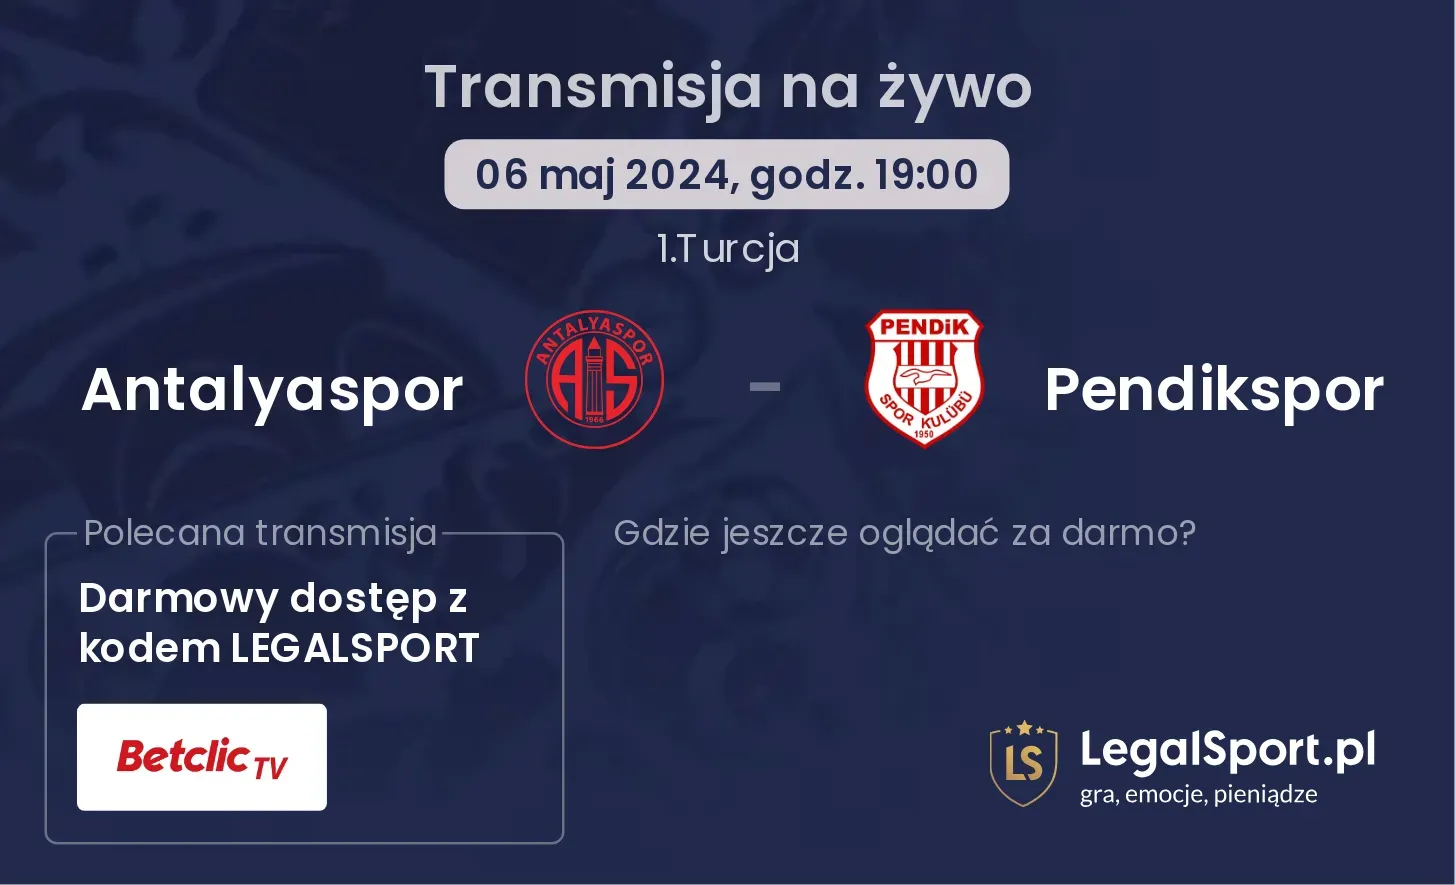 Antalyaspor - Pendikspor transmisja na żywo